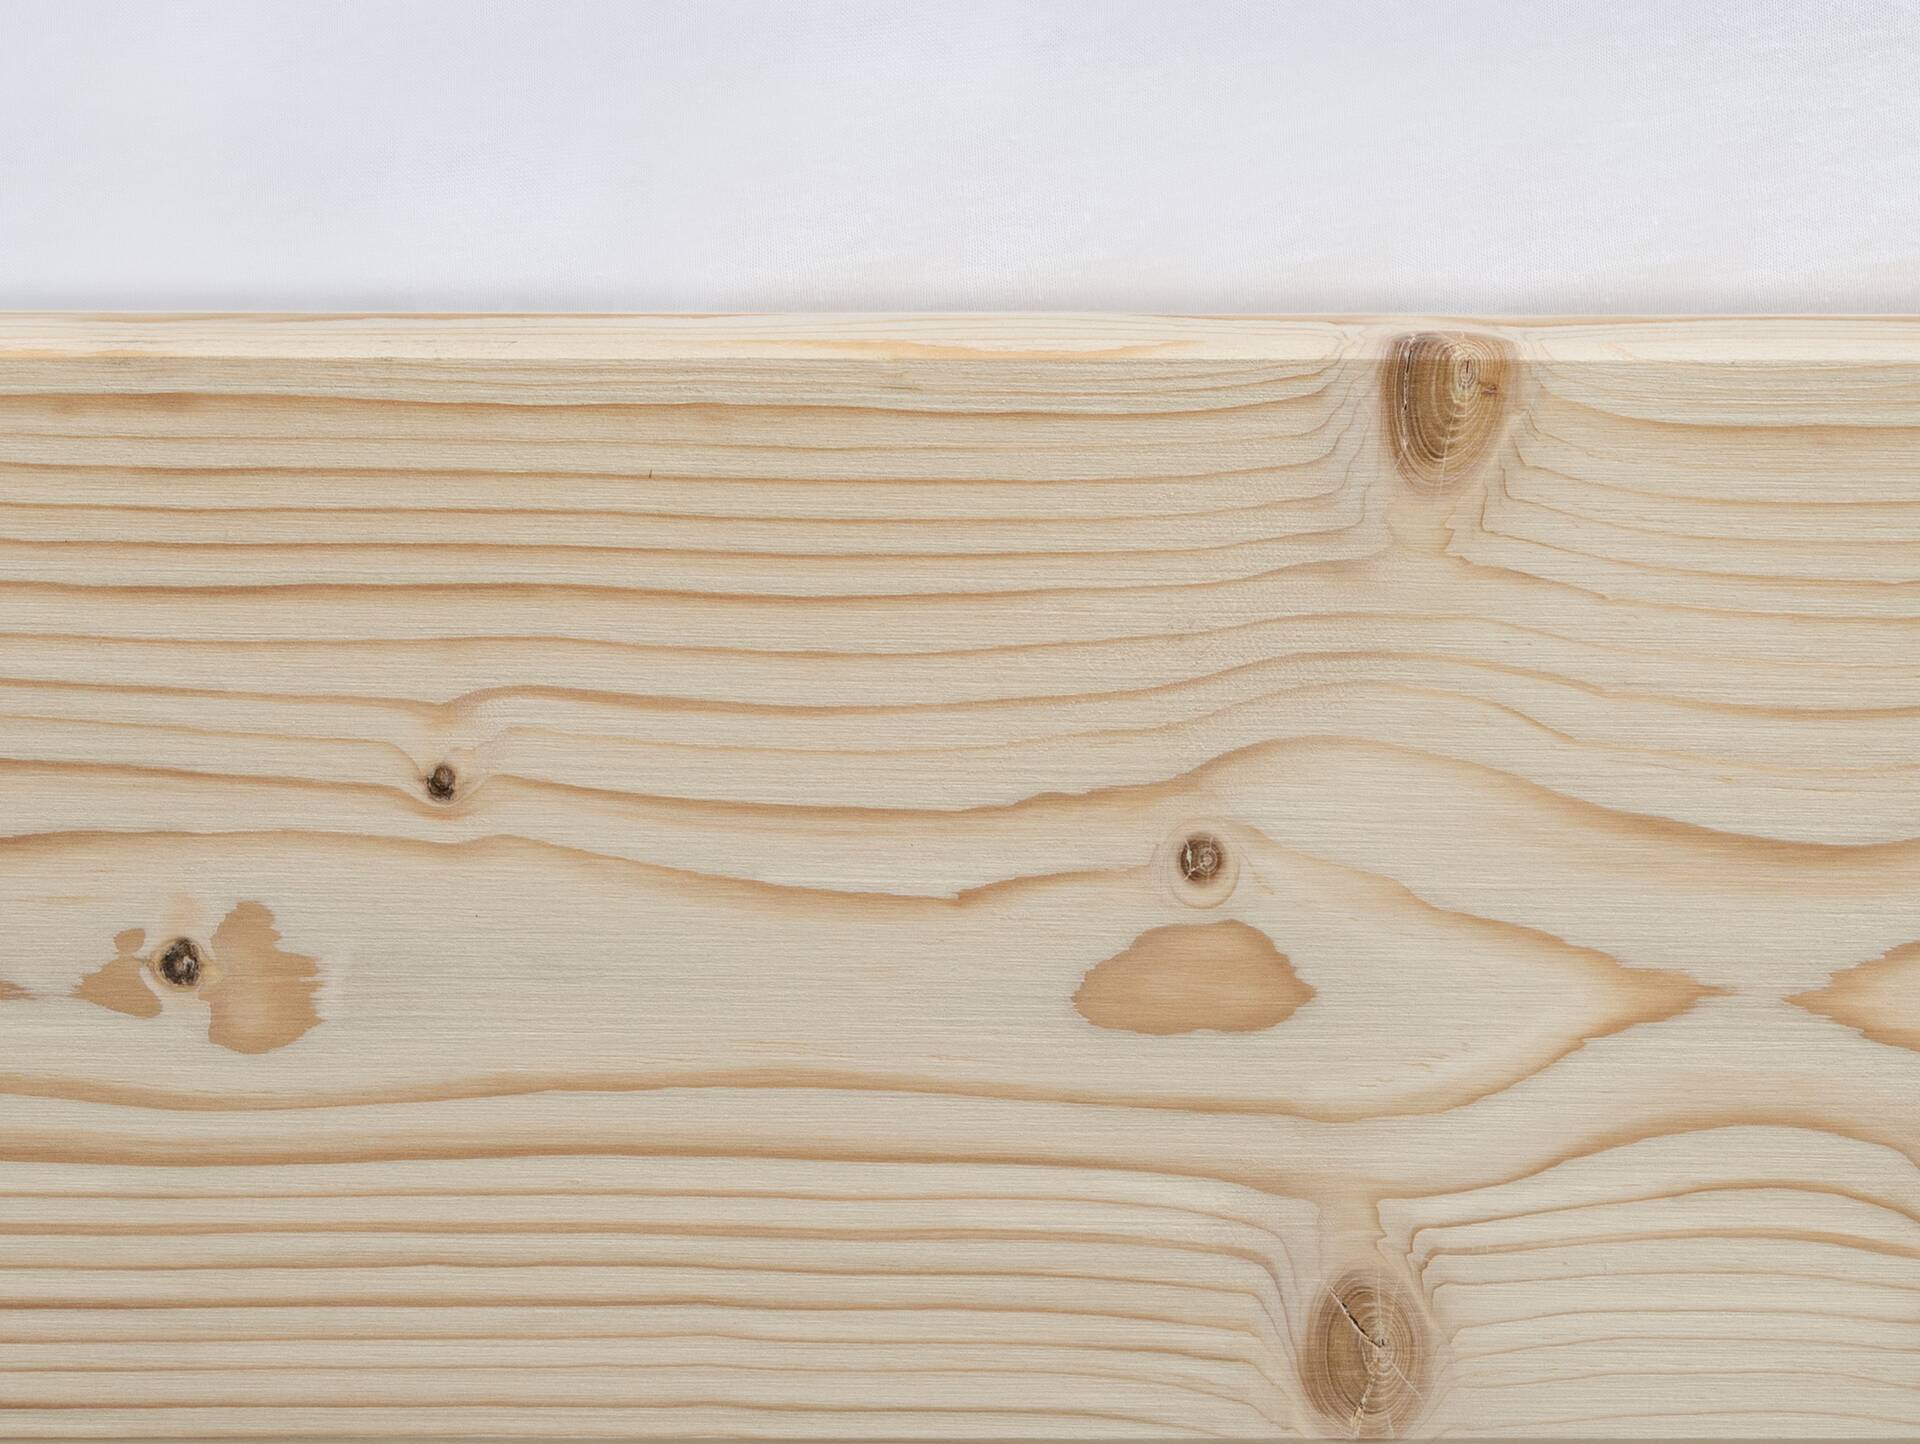 LUKY Kufenbett ohne Kopfteil, Material Massivholz, Fichte massiv, Kufen schwarz 90 x 200 cm | natur